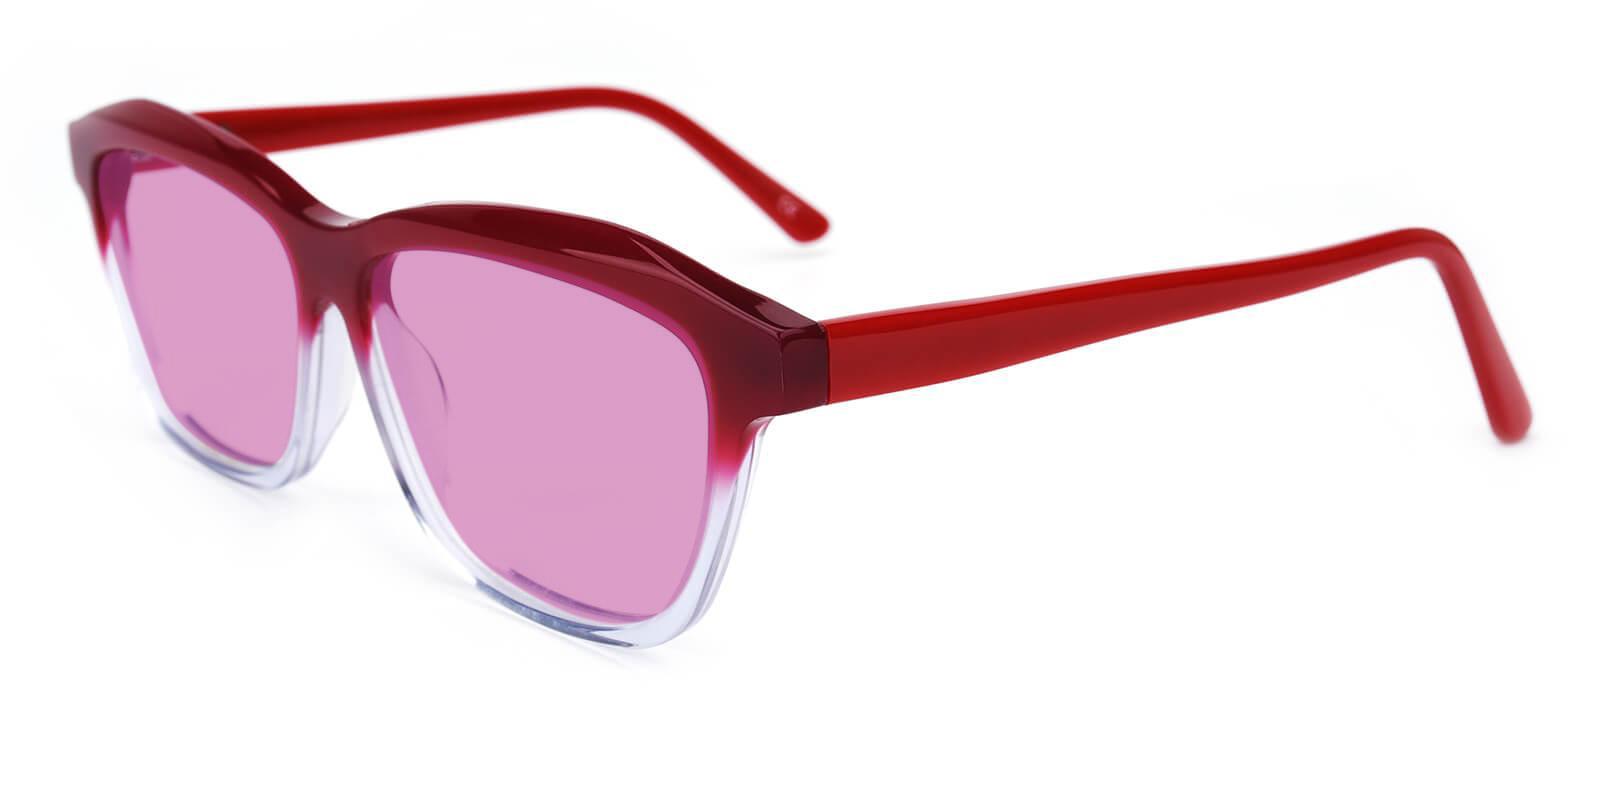 Morning Red Acetate SpringHinges , Sunglasses , UniversalBridgeFit Frames from ABBE Glasses